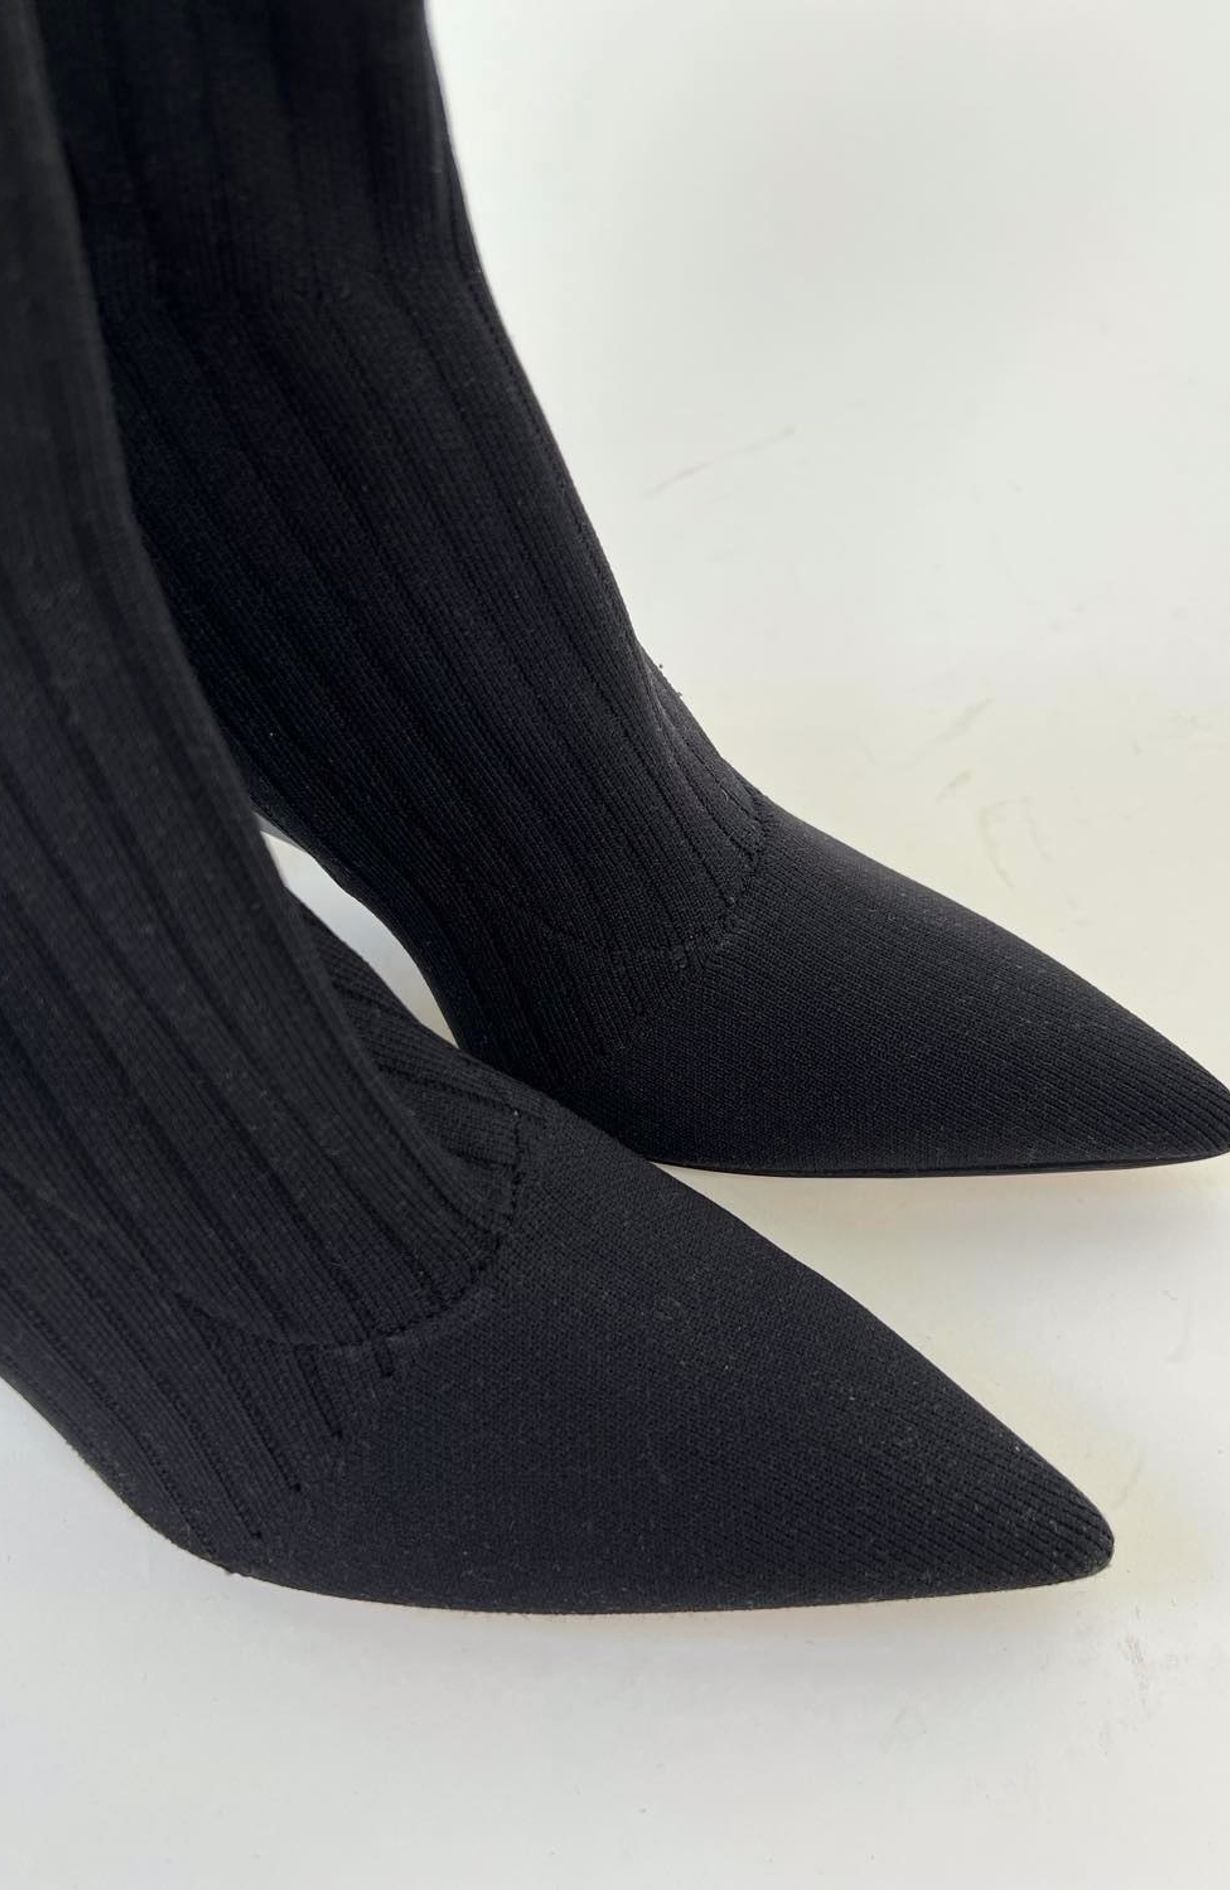 Gia x RHW boots sock black size 39